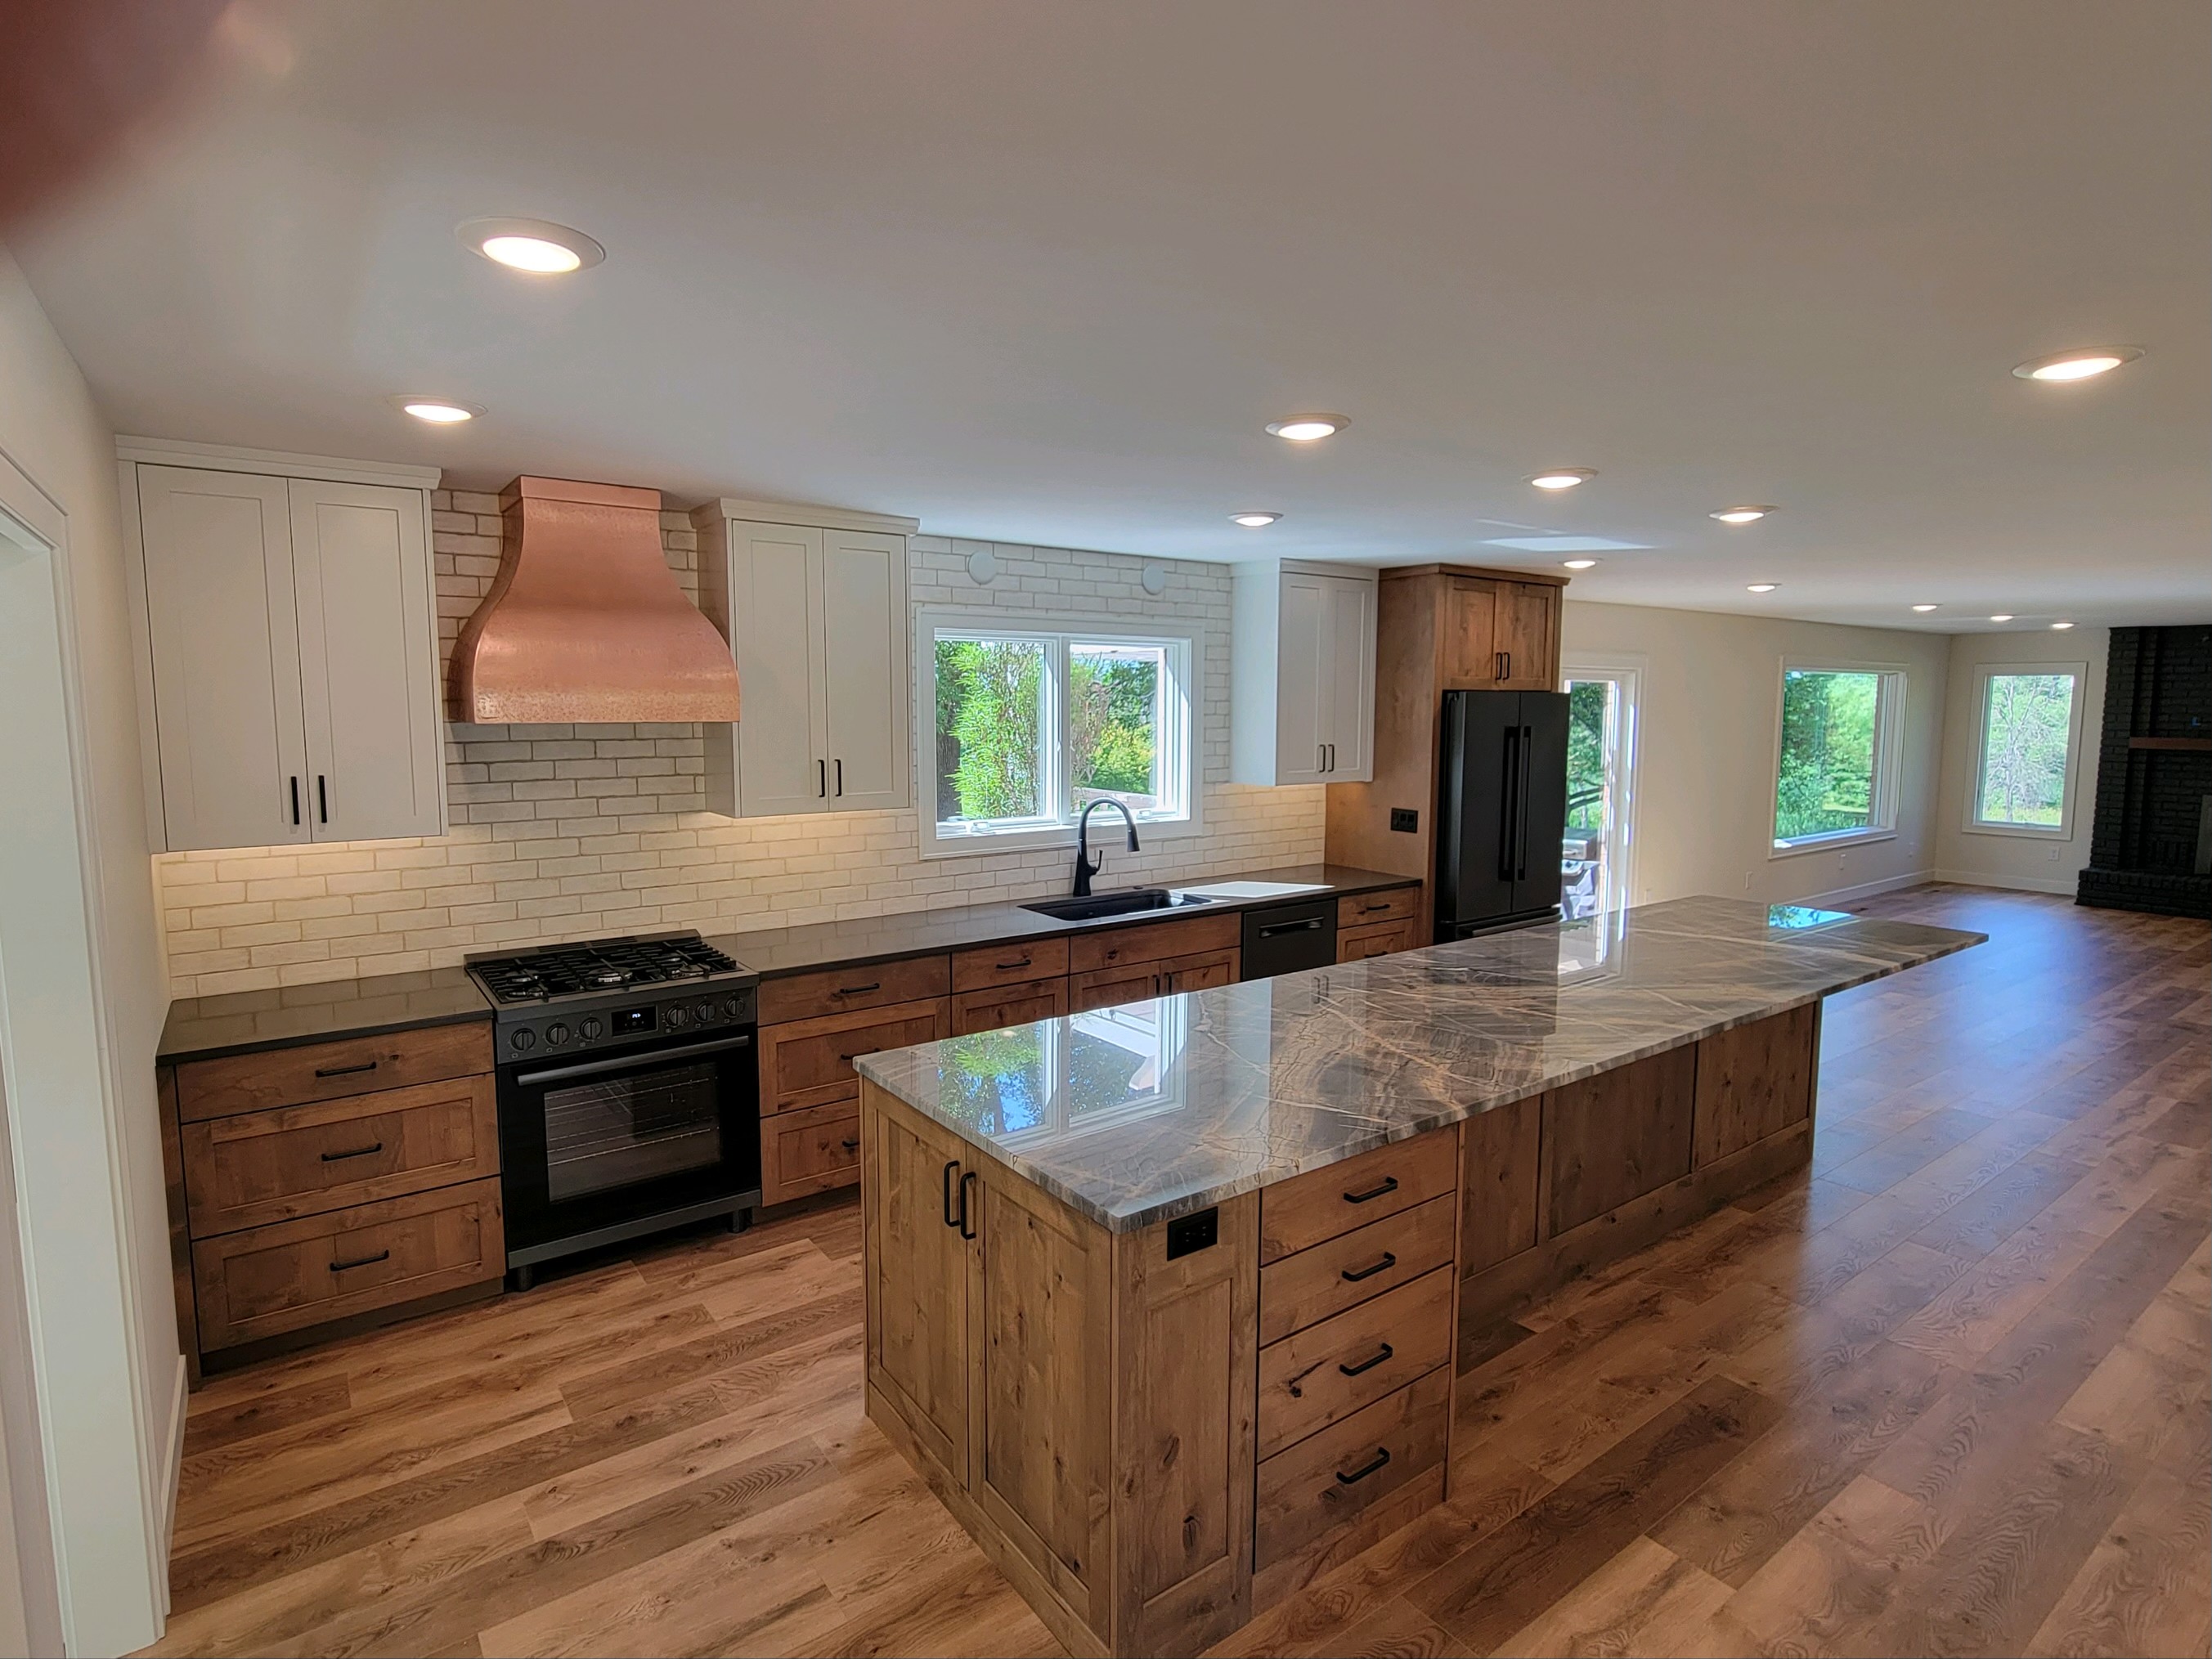 Unique range hood options, kitchen design idea, including craftsman kitchen concepts,white kitchen cabinets, marble kitchen countertops, rustic brick backsplash